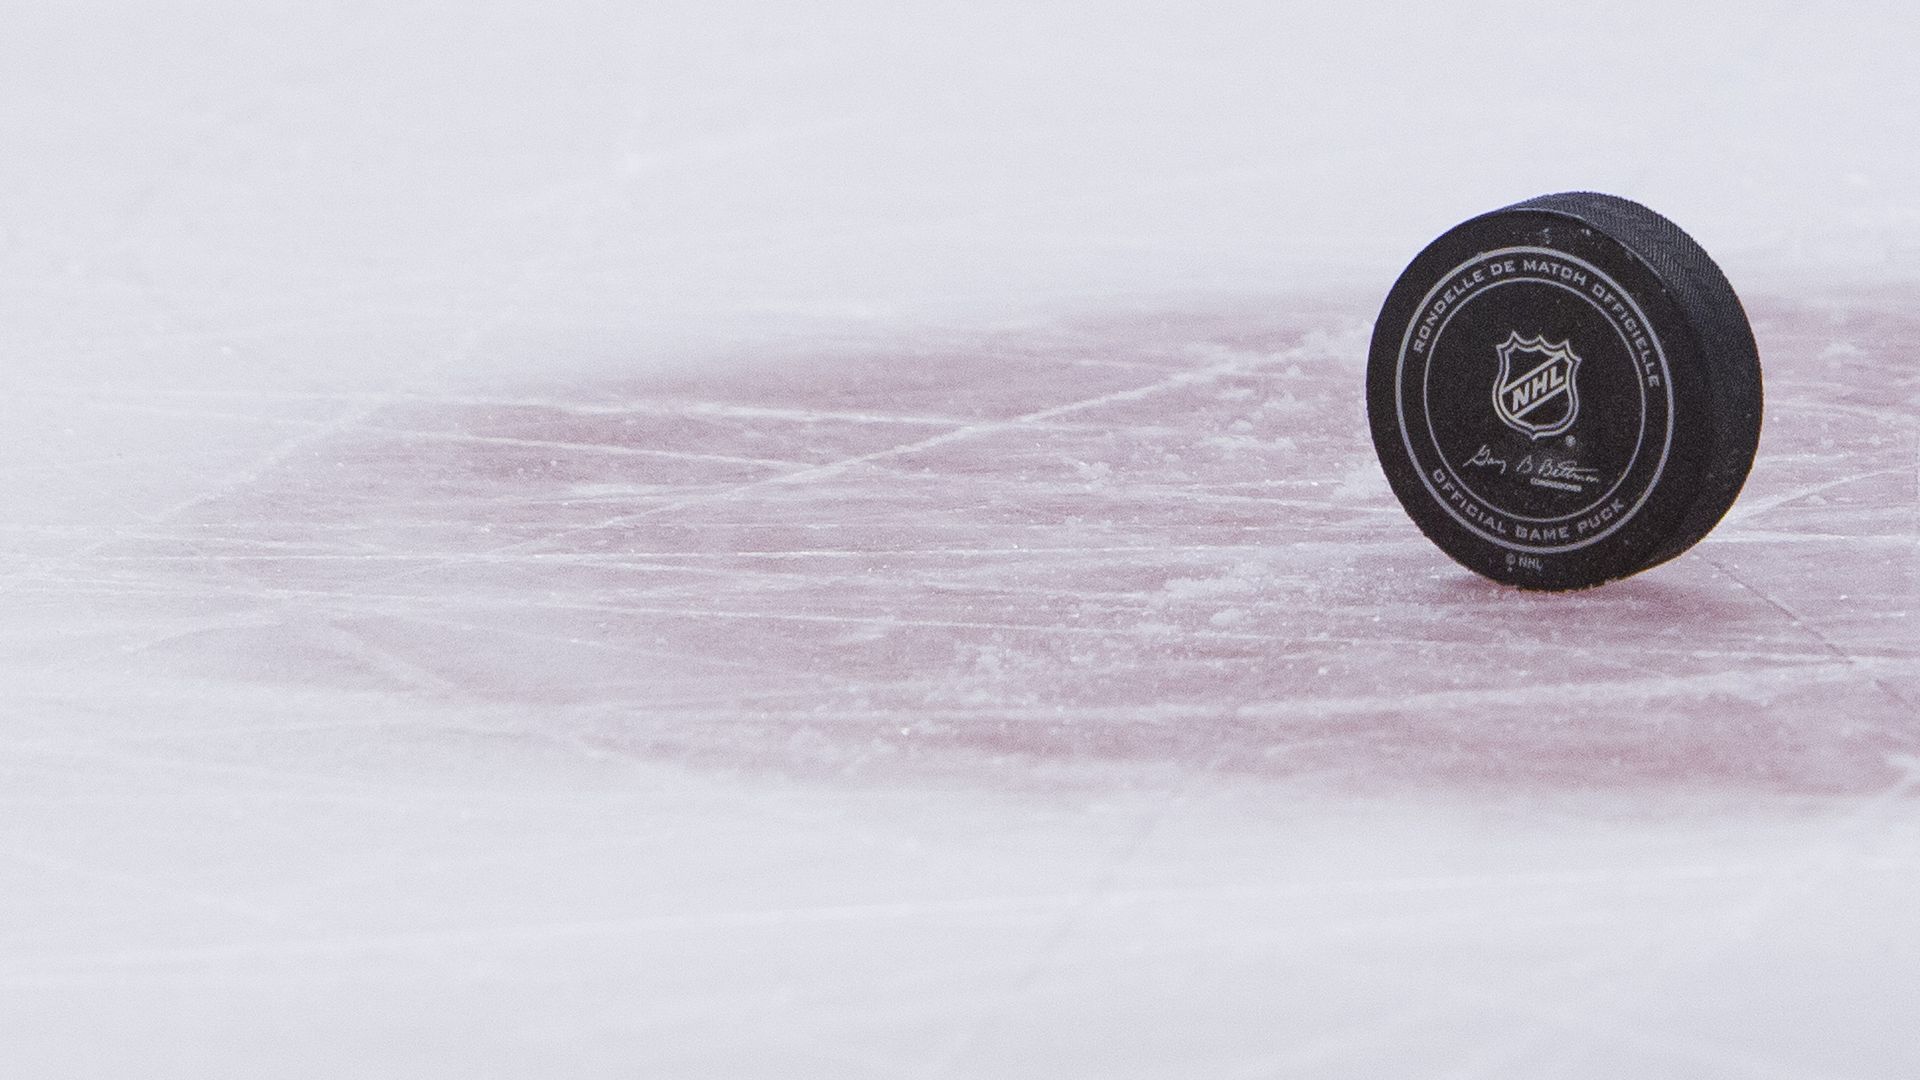 Hockey puck upright on ice